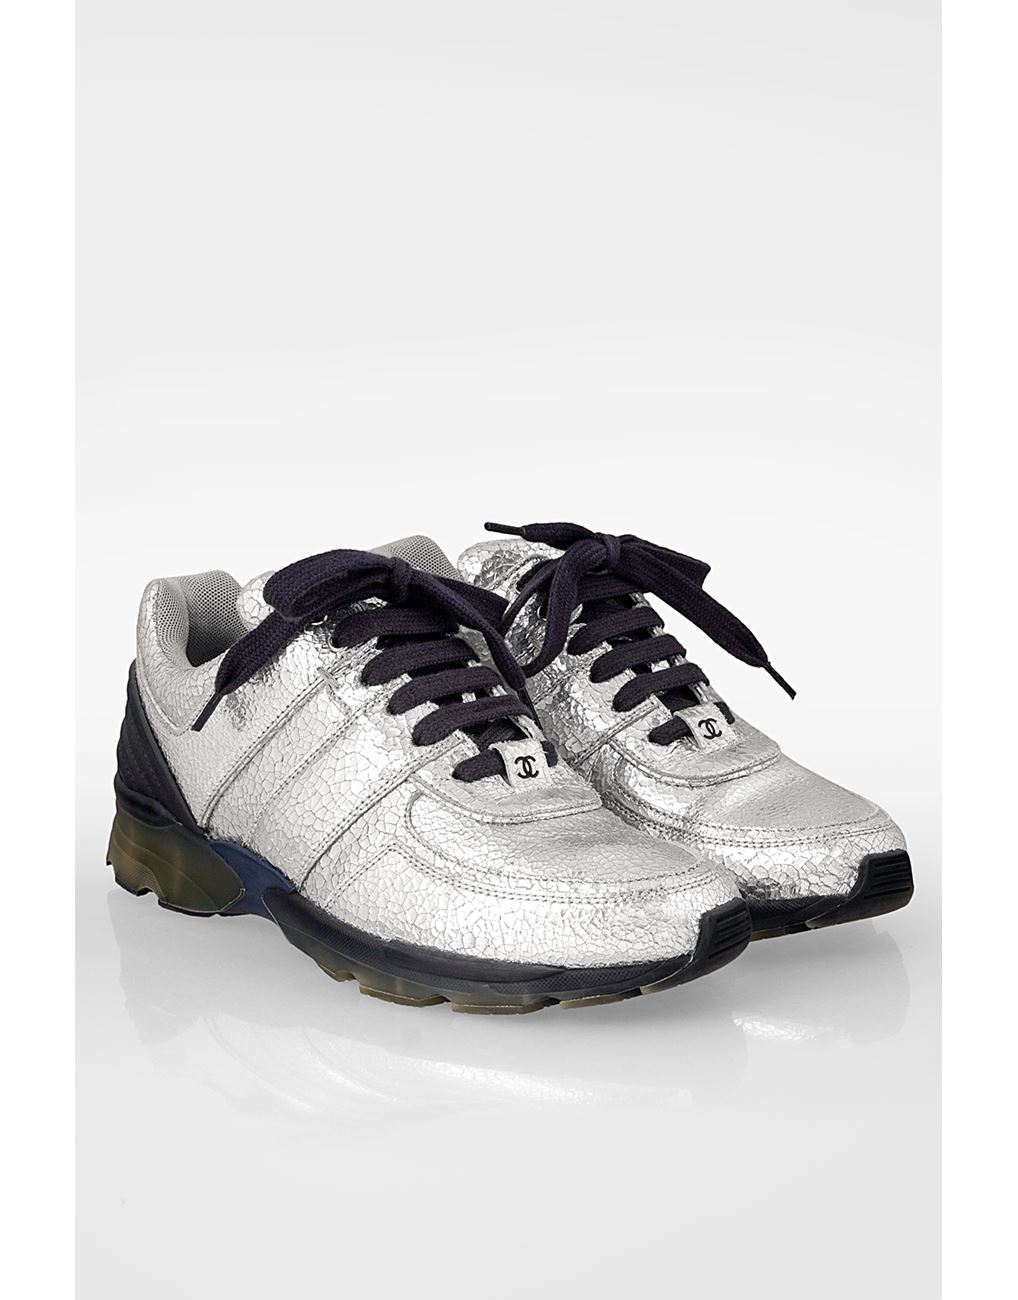 white black chanel sneakers 38